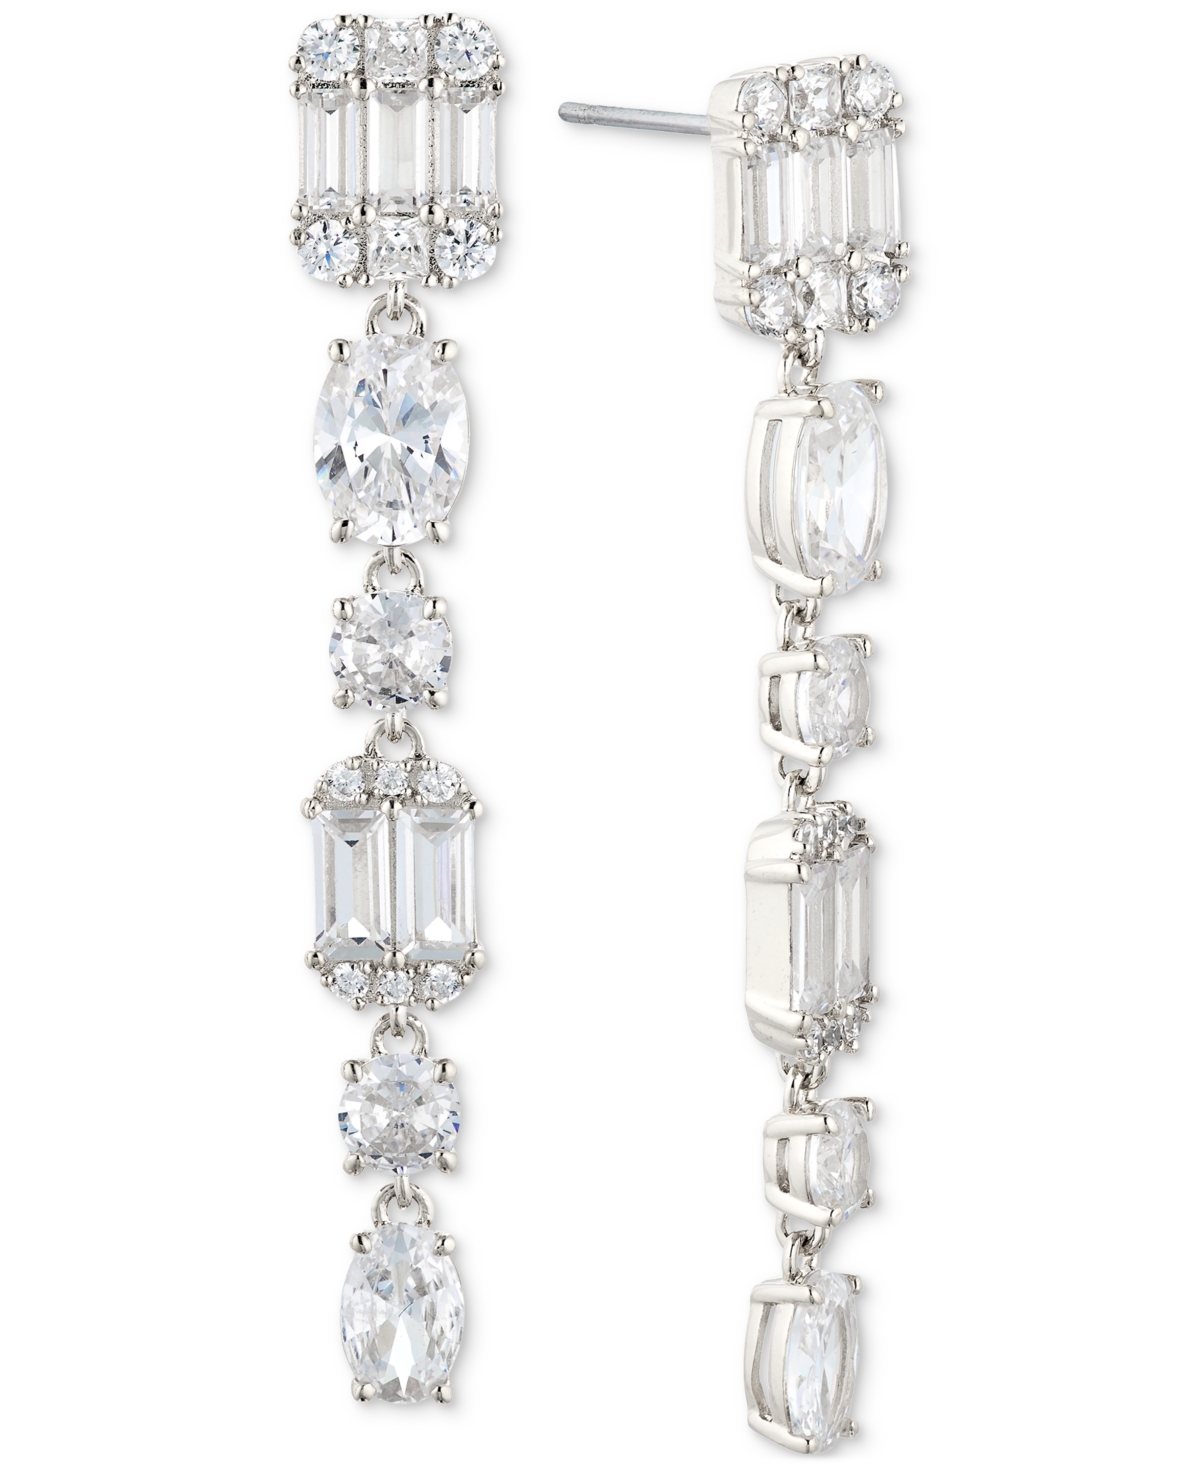 Eliot Danori Silver-tone Cubic Zirconia Cluster Linear Earrings, Created For Macy's